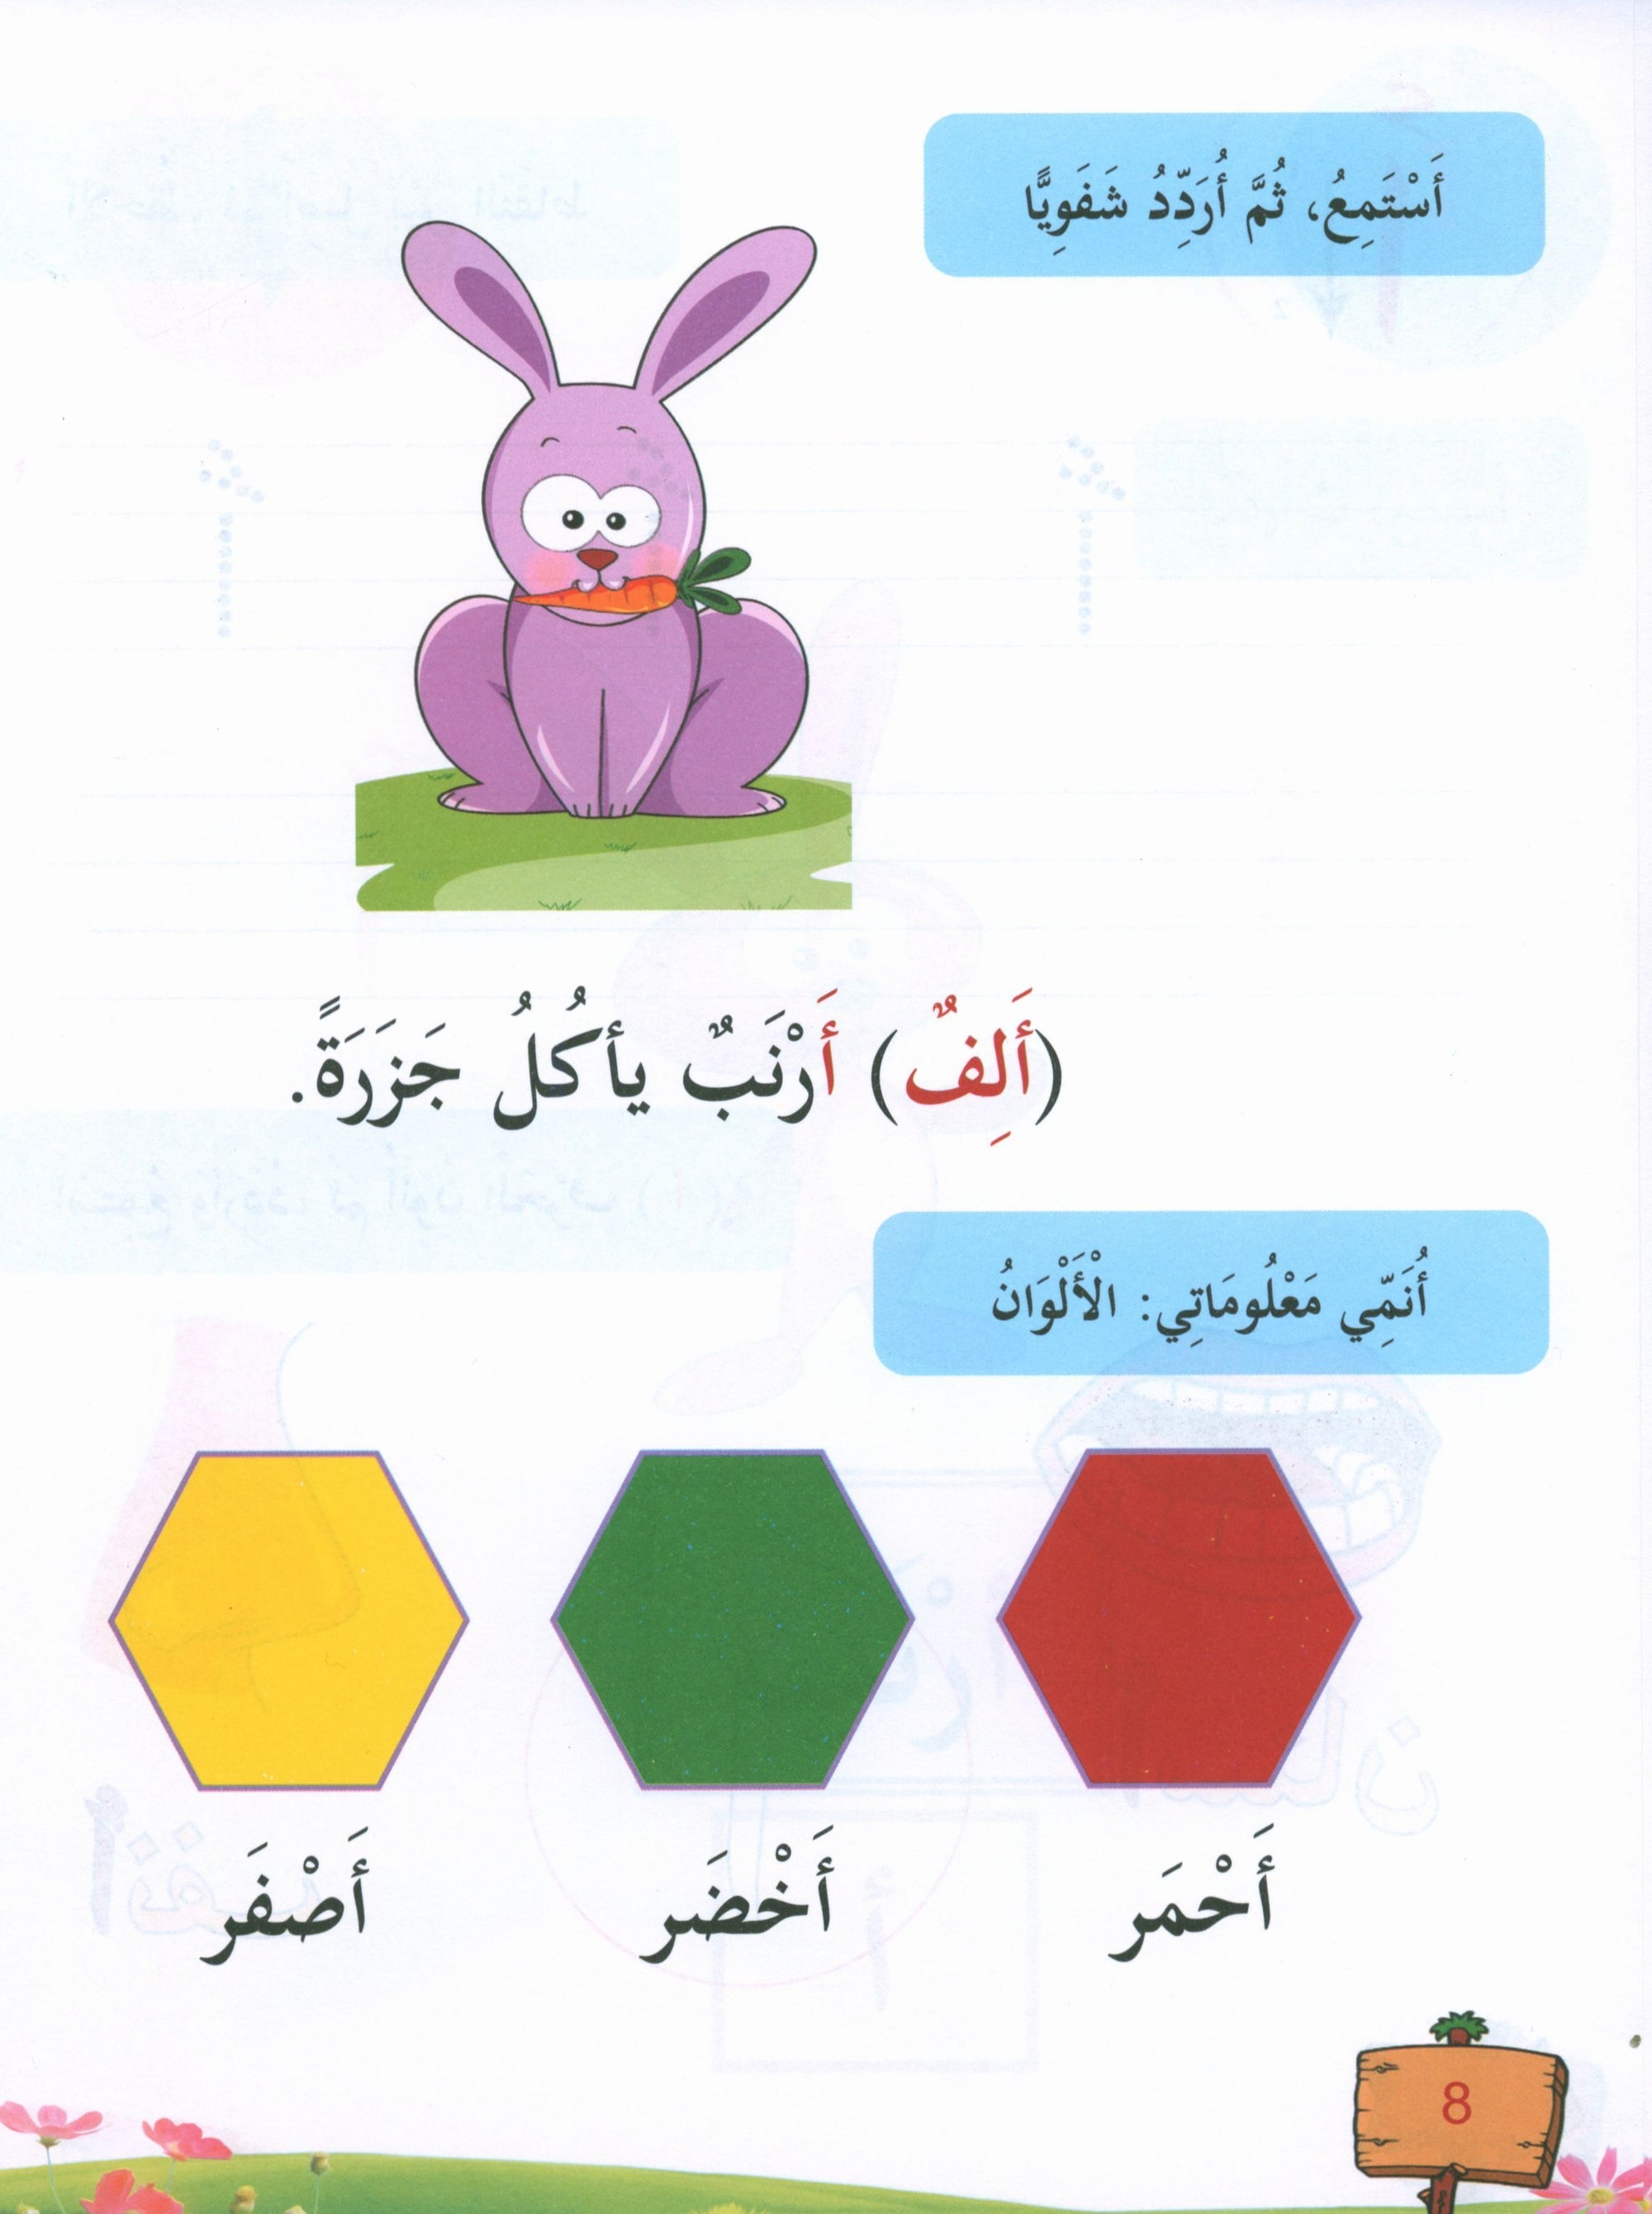 In the Arabic Garden Textbook Level KG1 في حديقة اللغة العربية